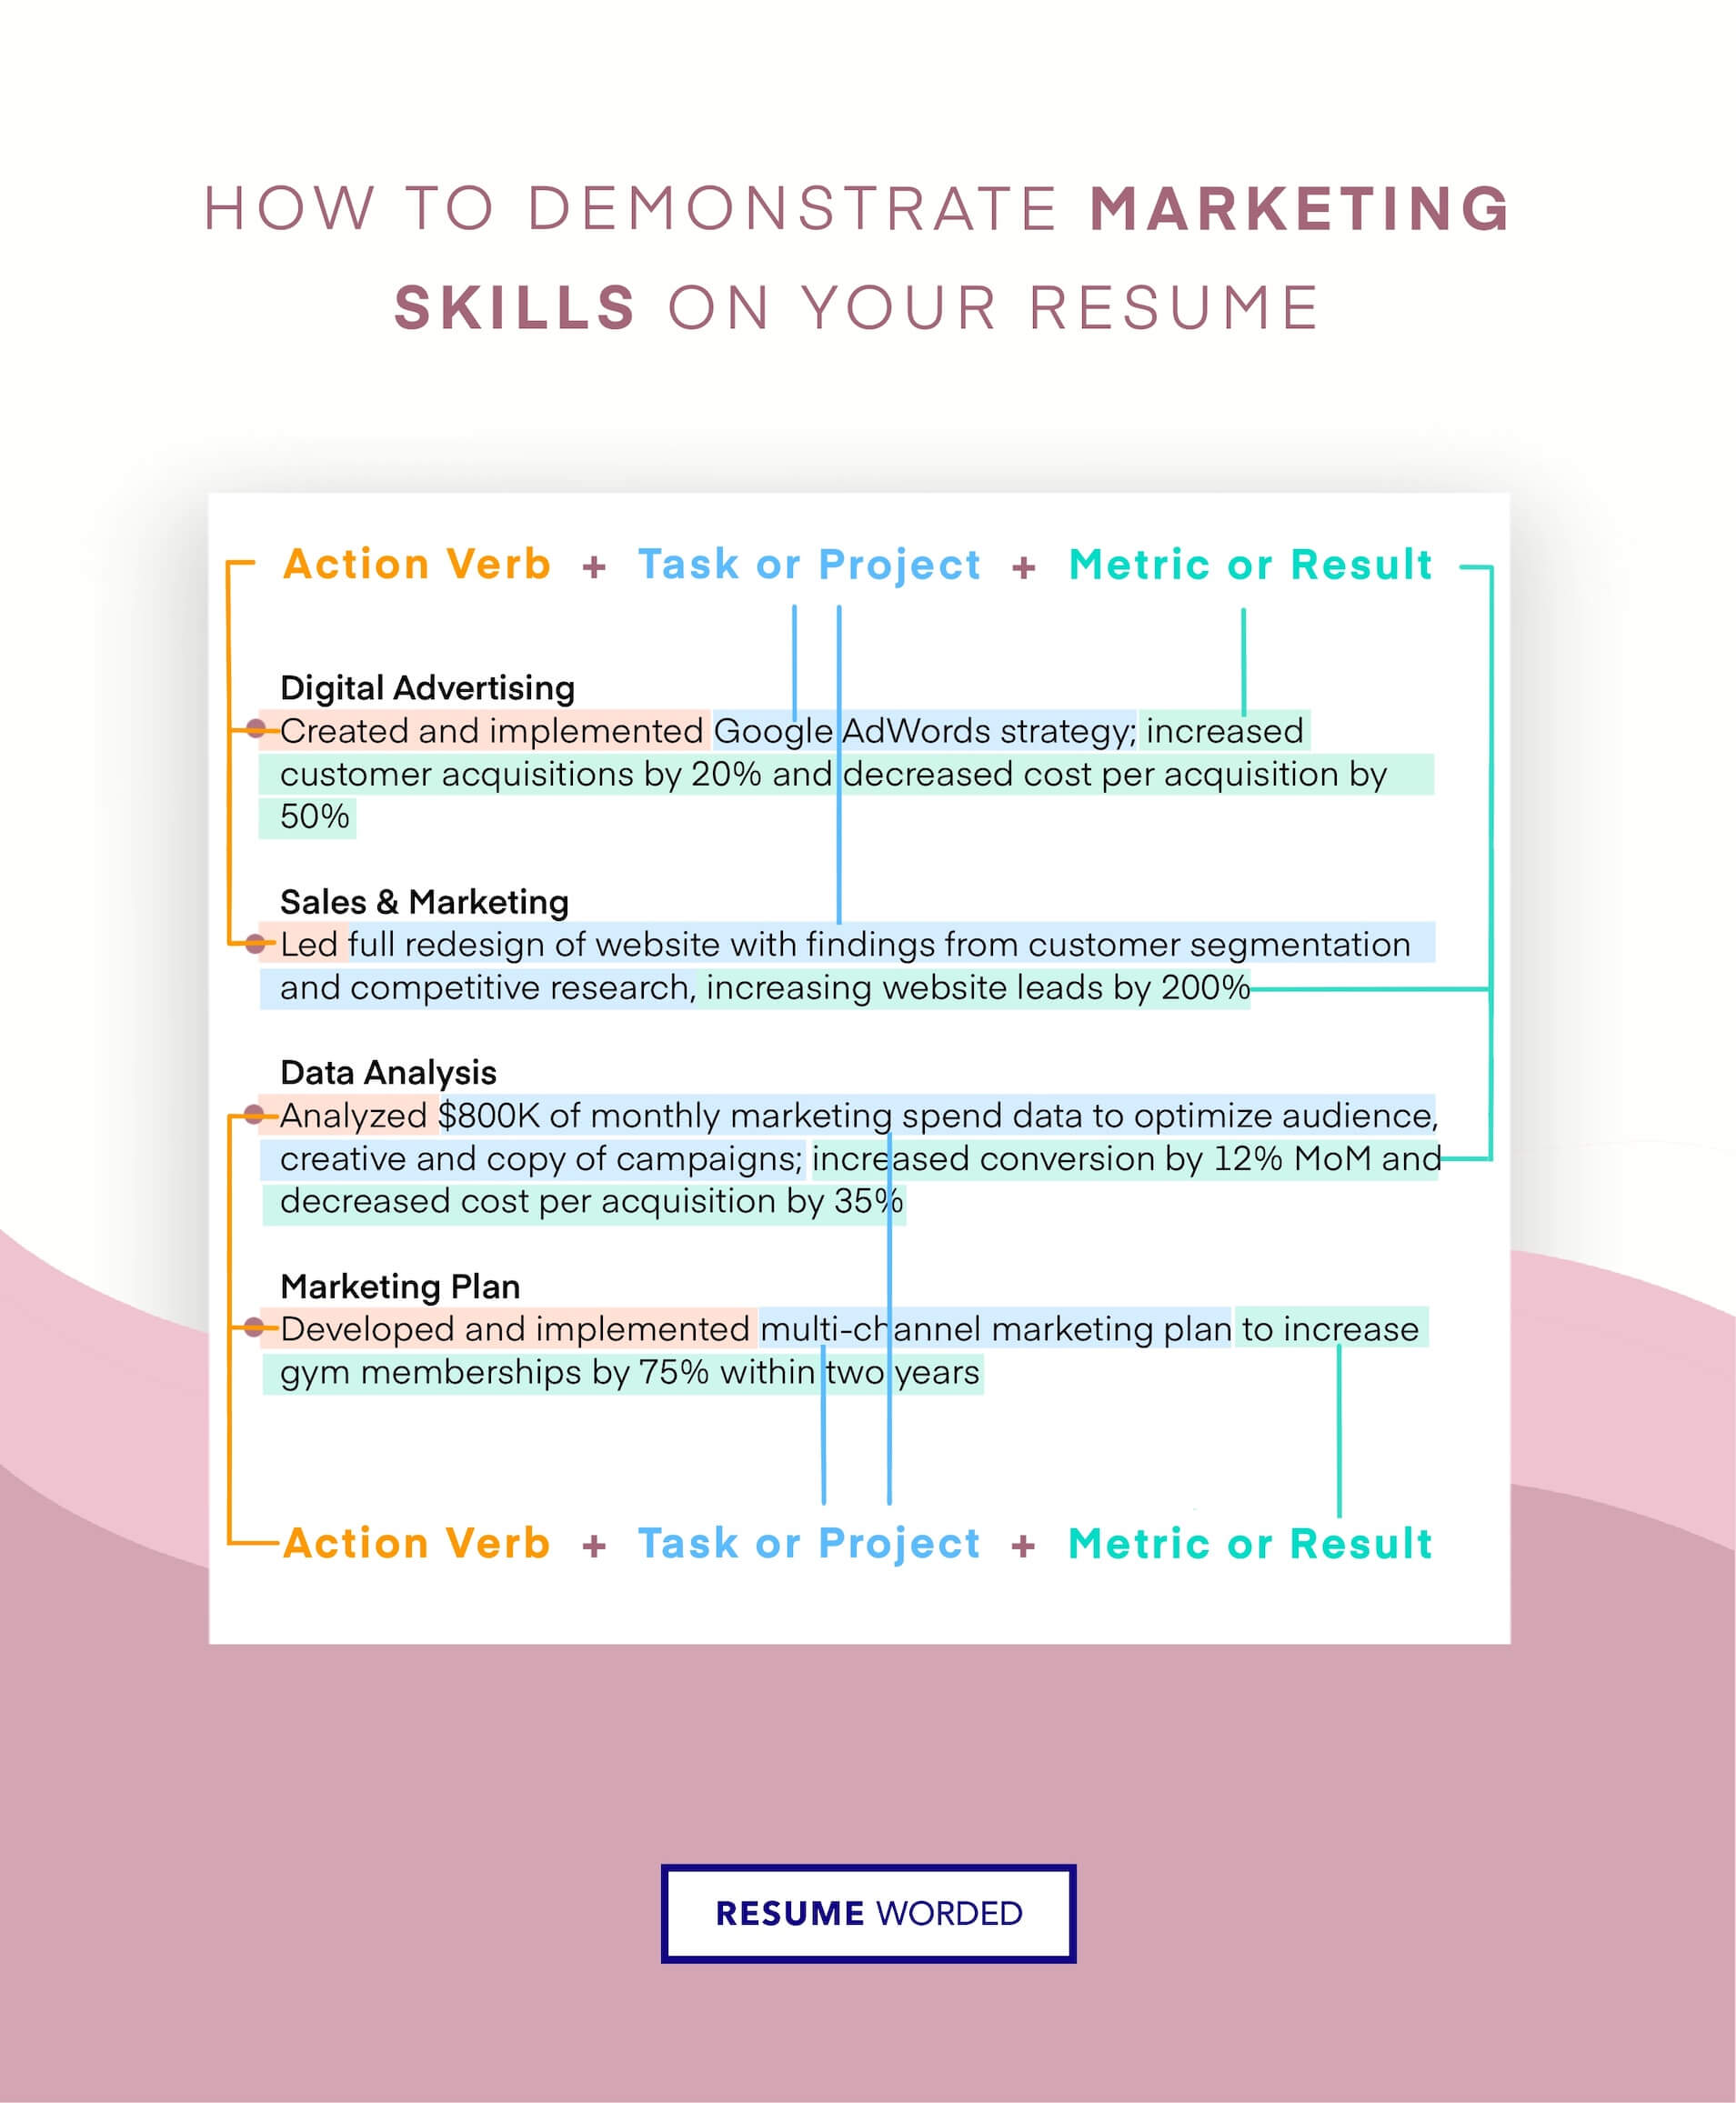 Skills section lists digital marketing hard skills - Digital Marketing Manager Resume